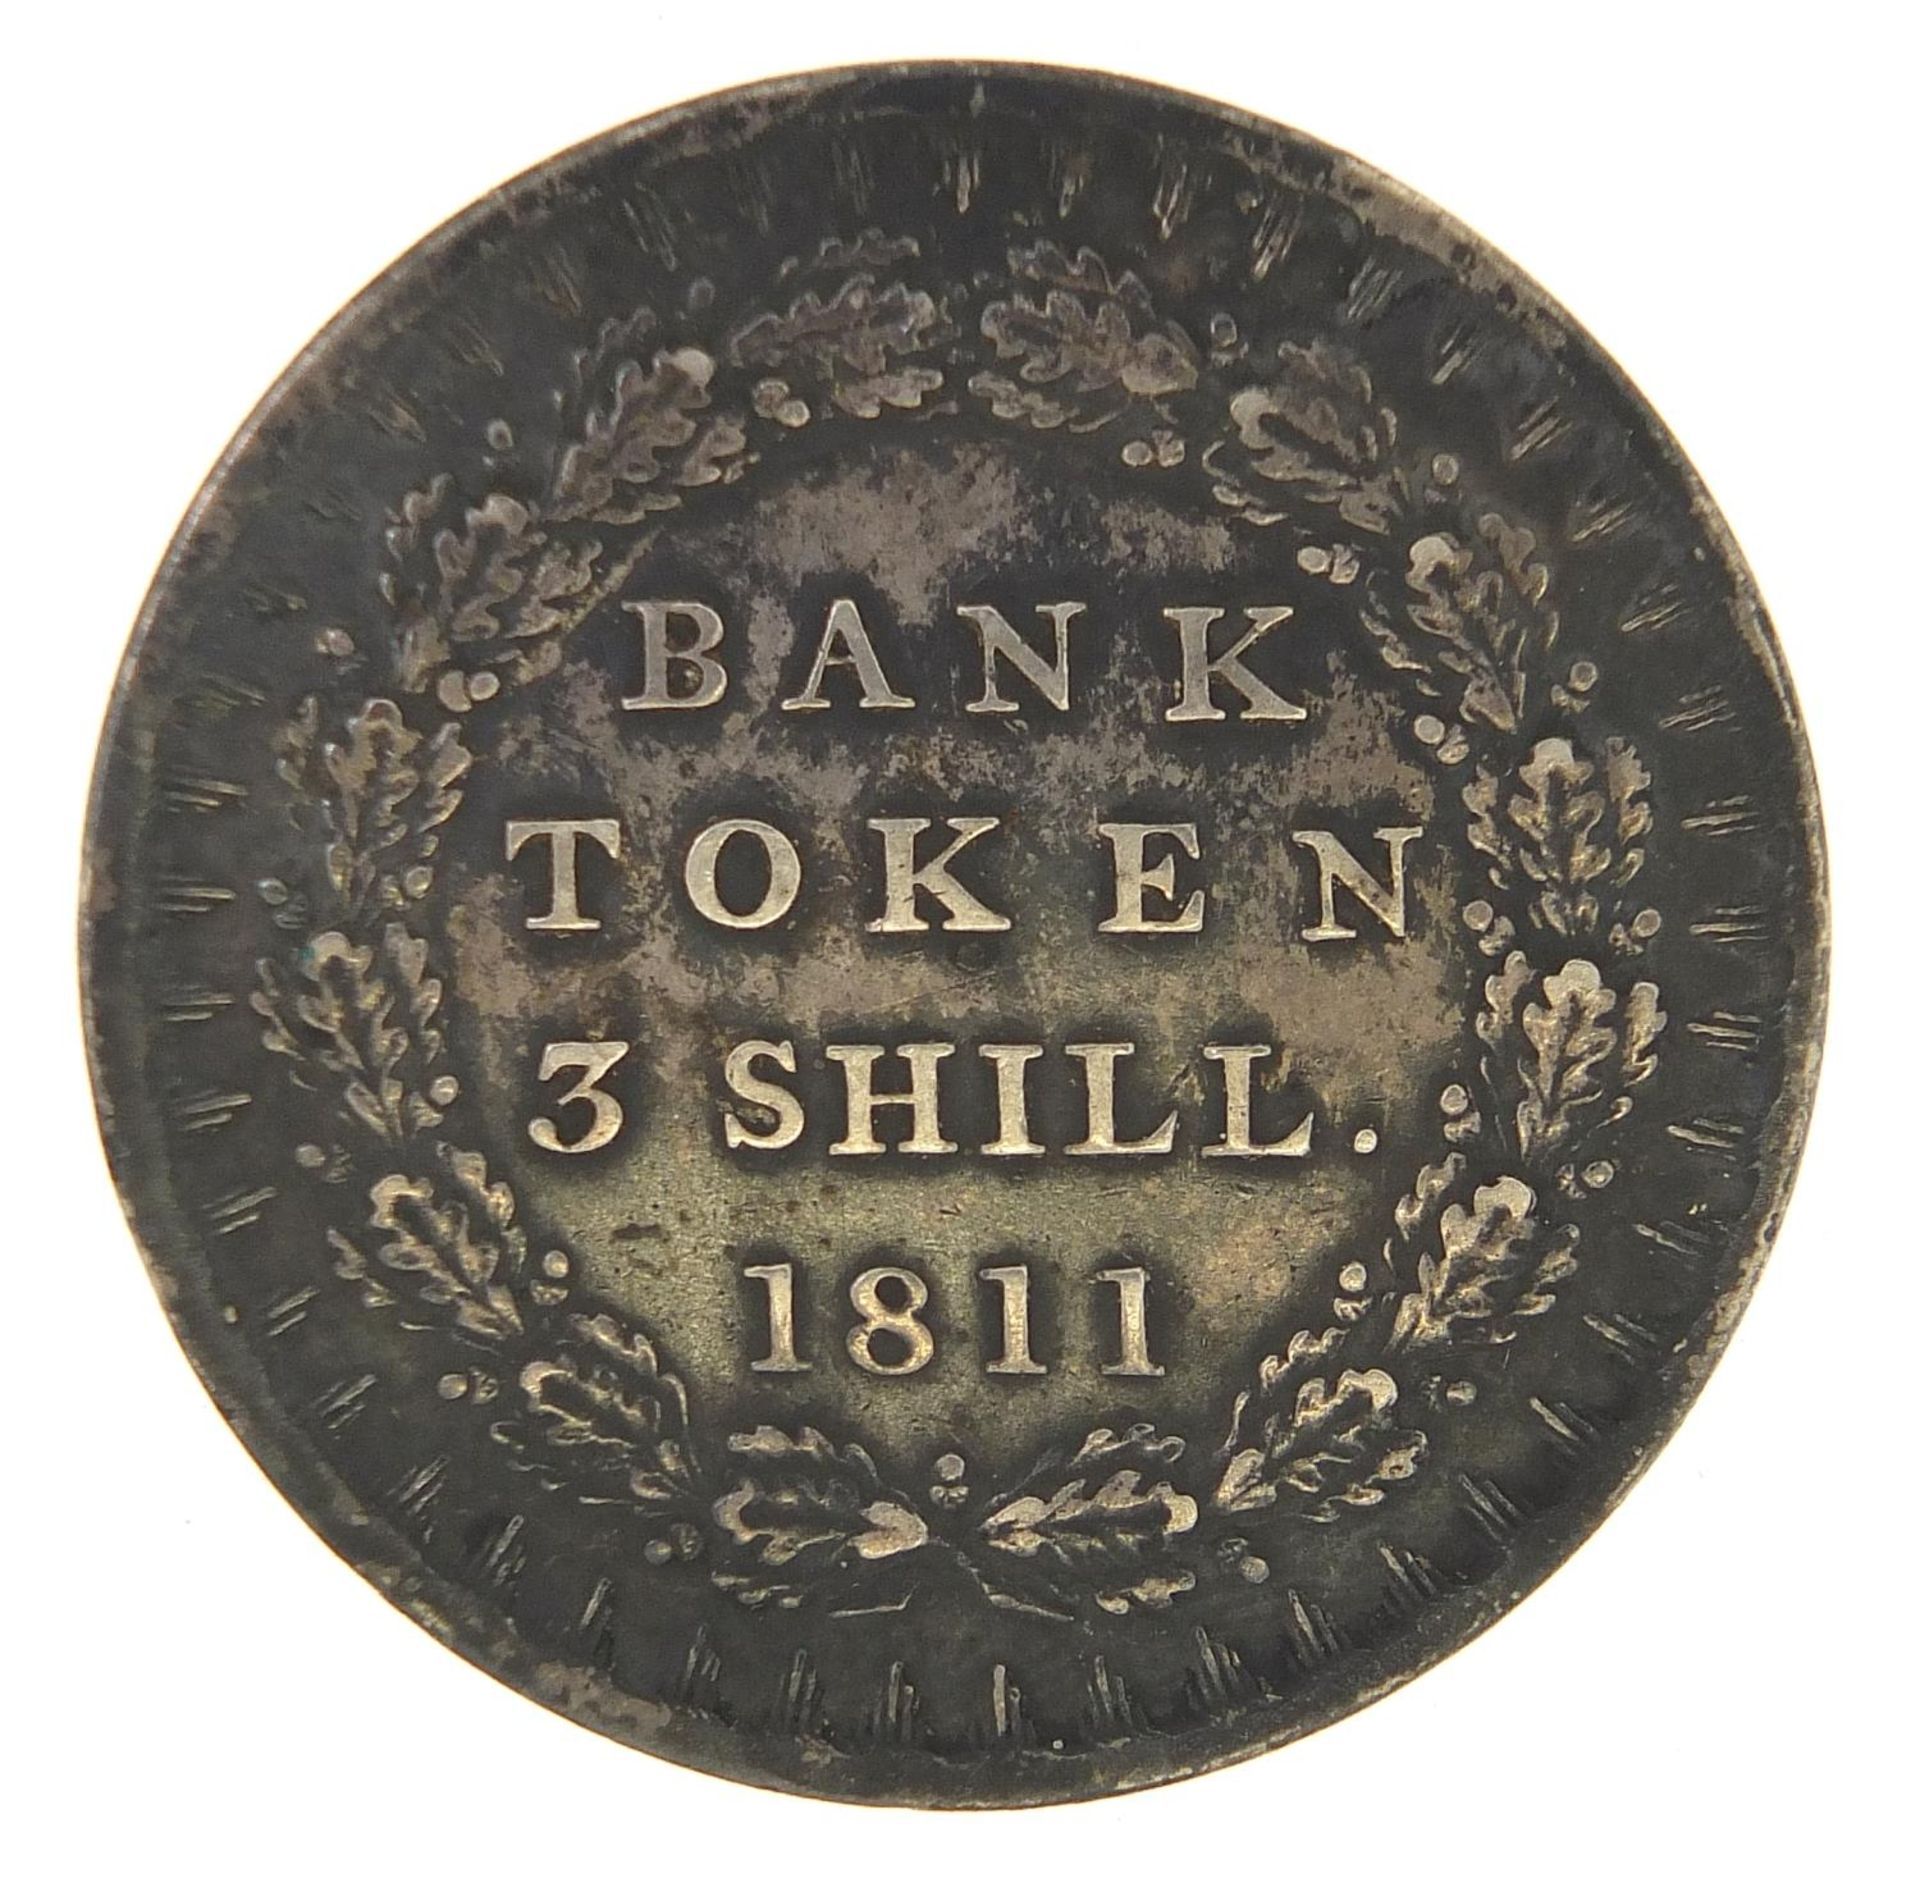 George III 1811 three shilling bank token